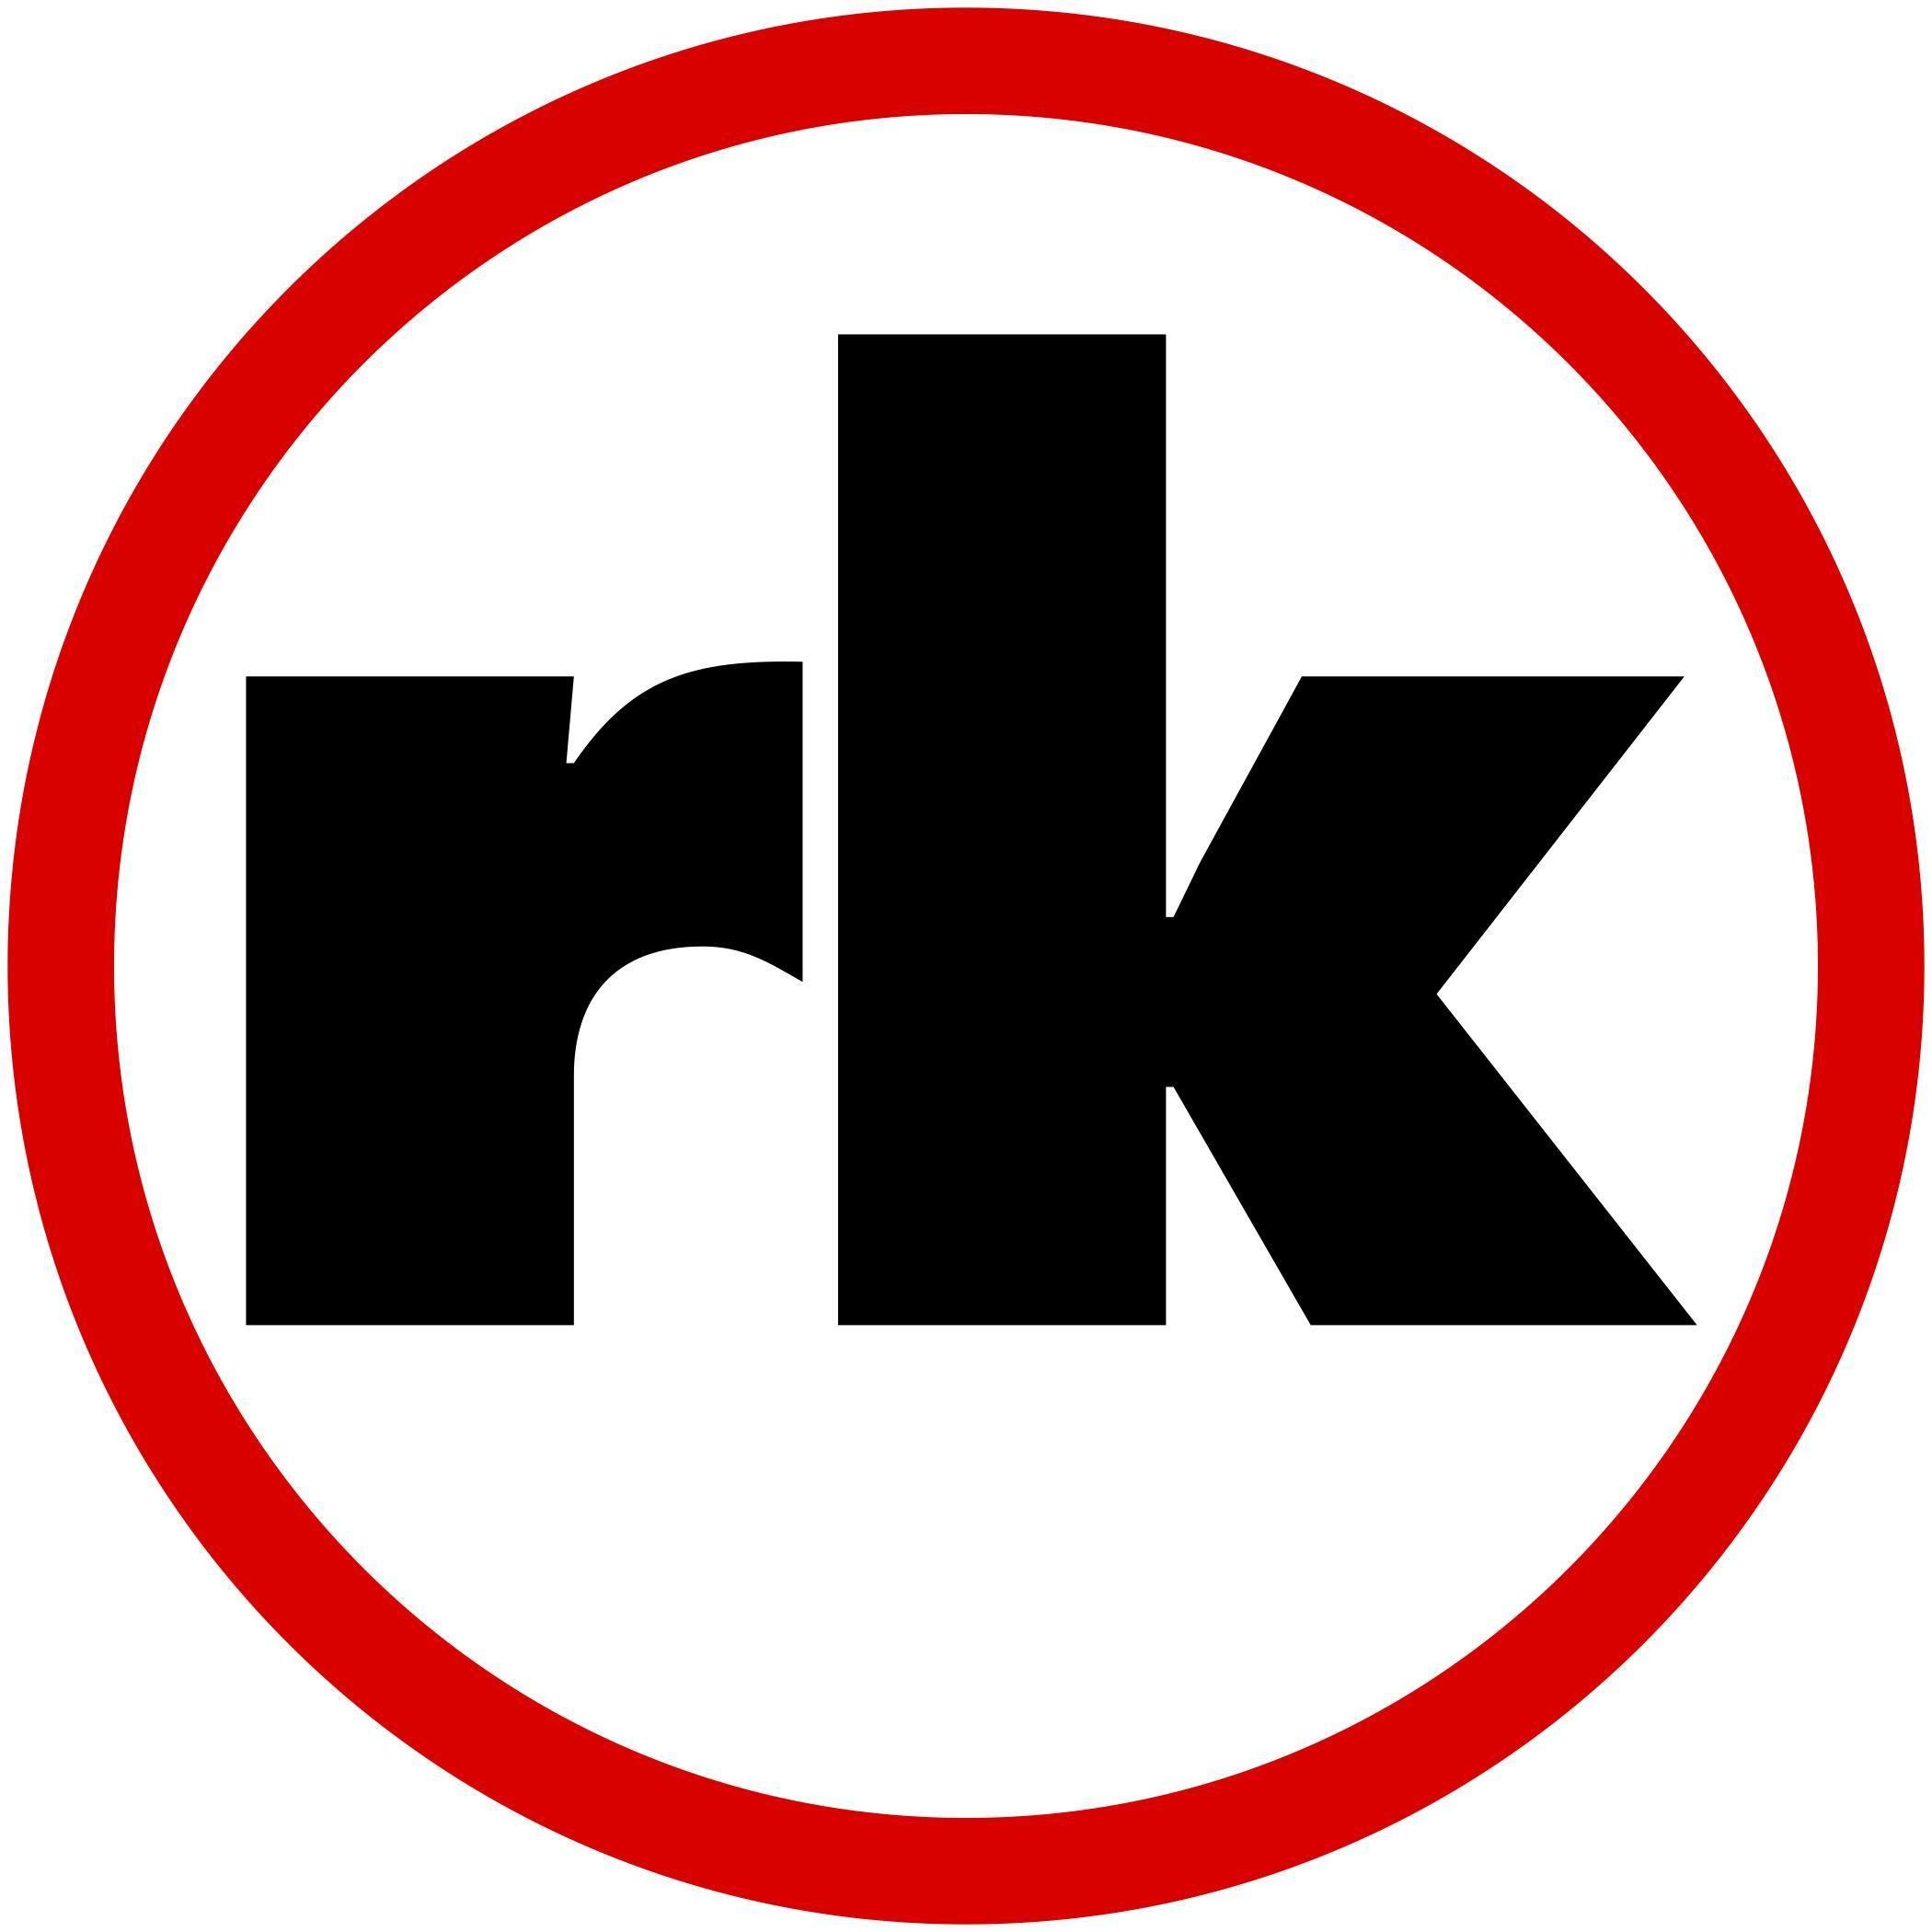 RK Logo - RK logo and Arthur E. Johnson Depression Center